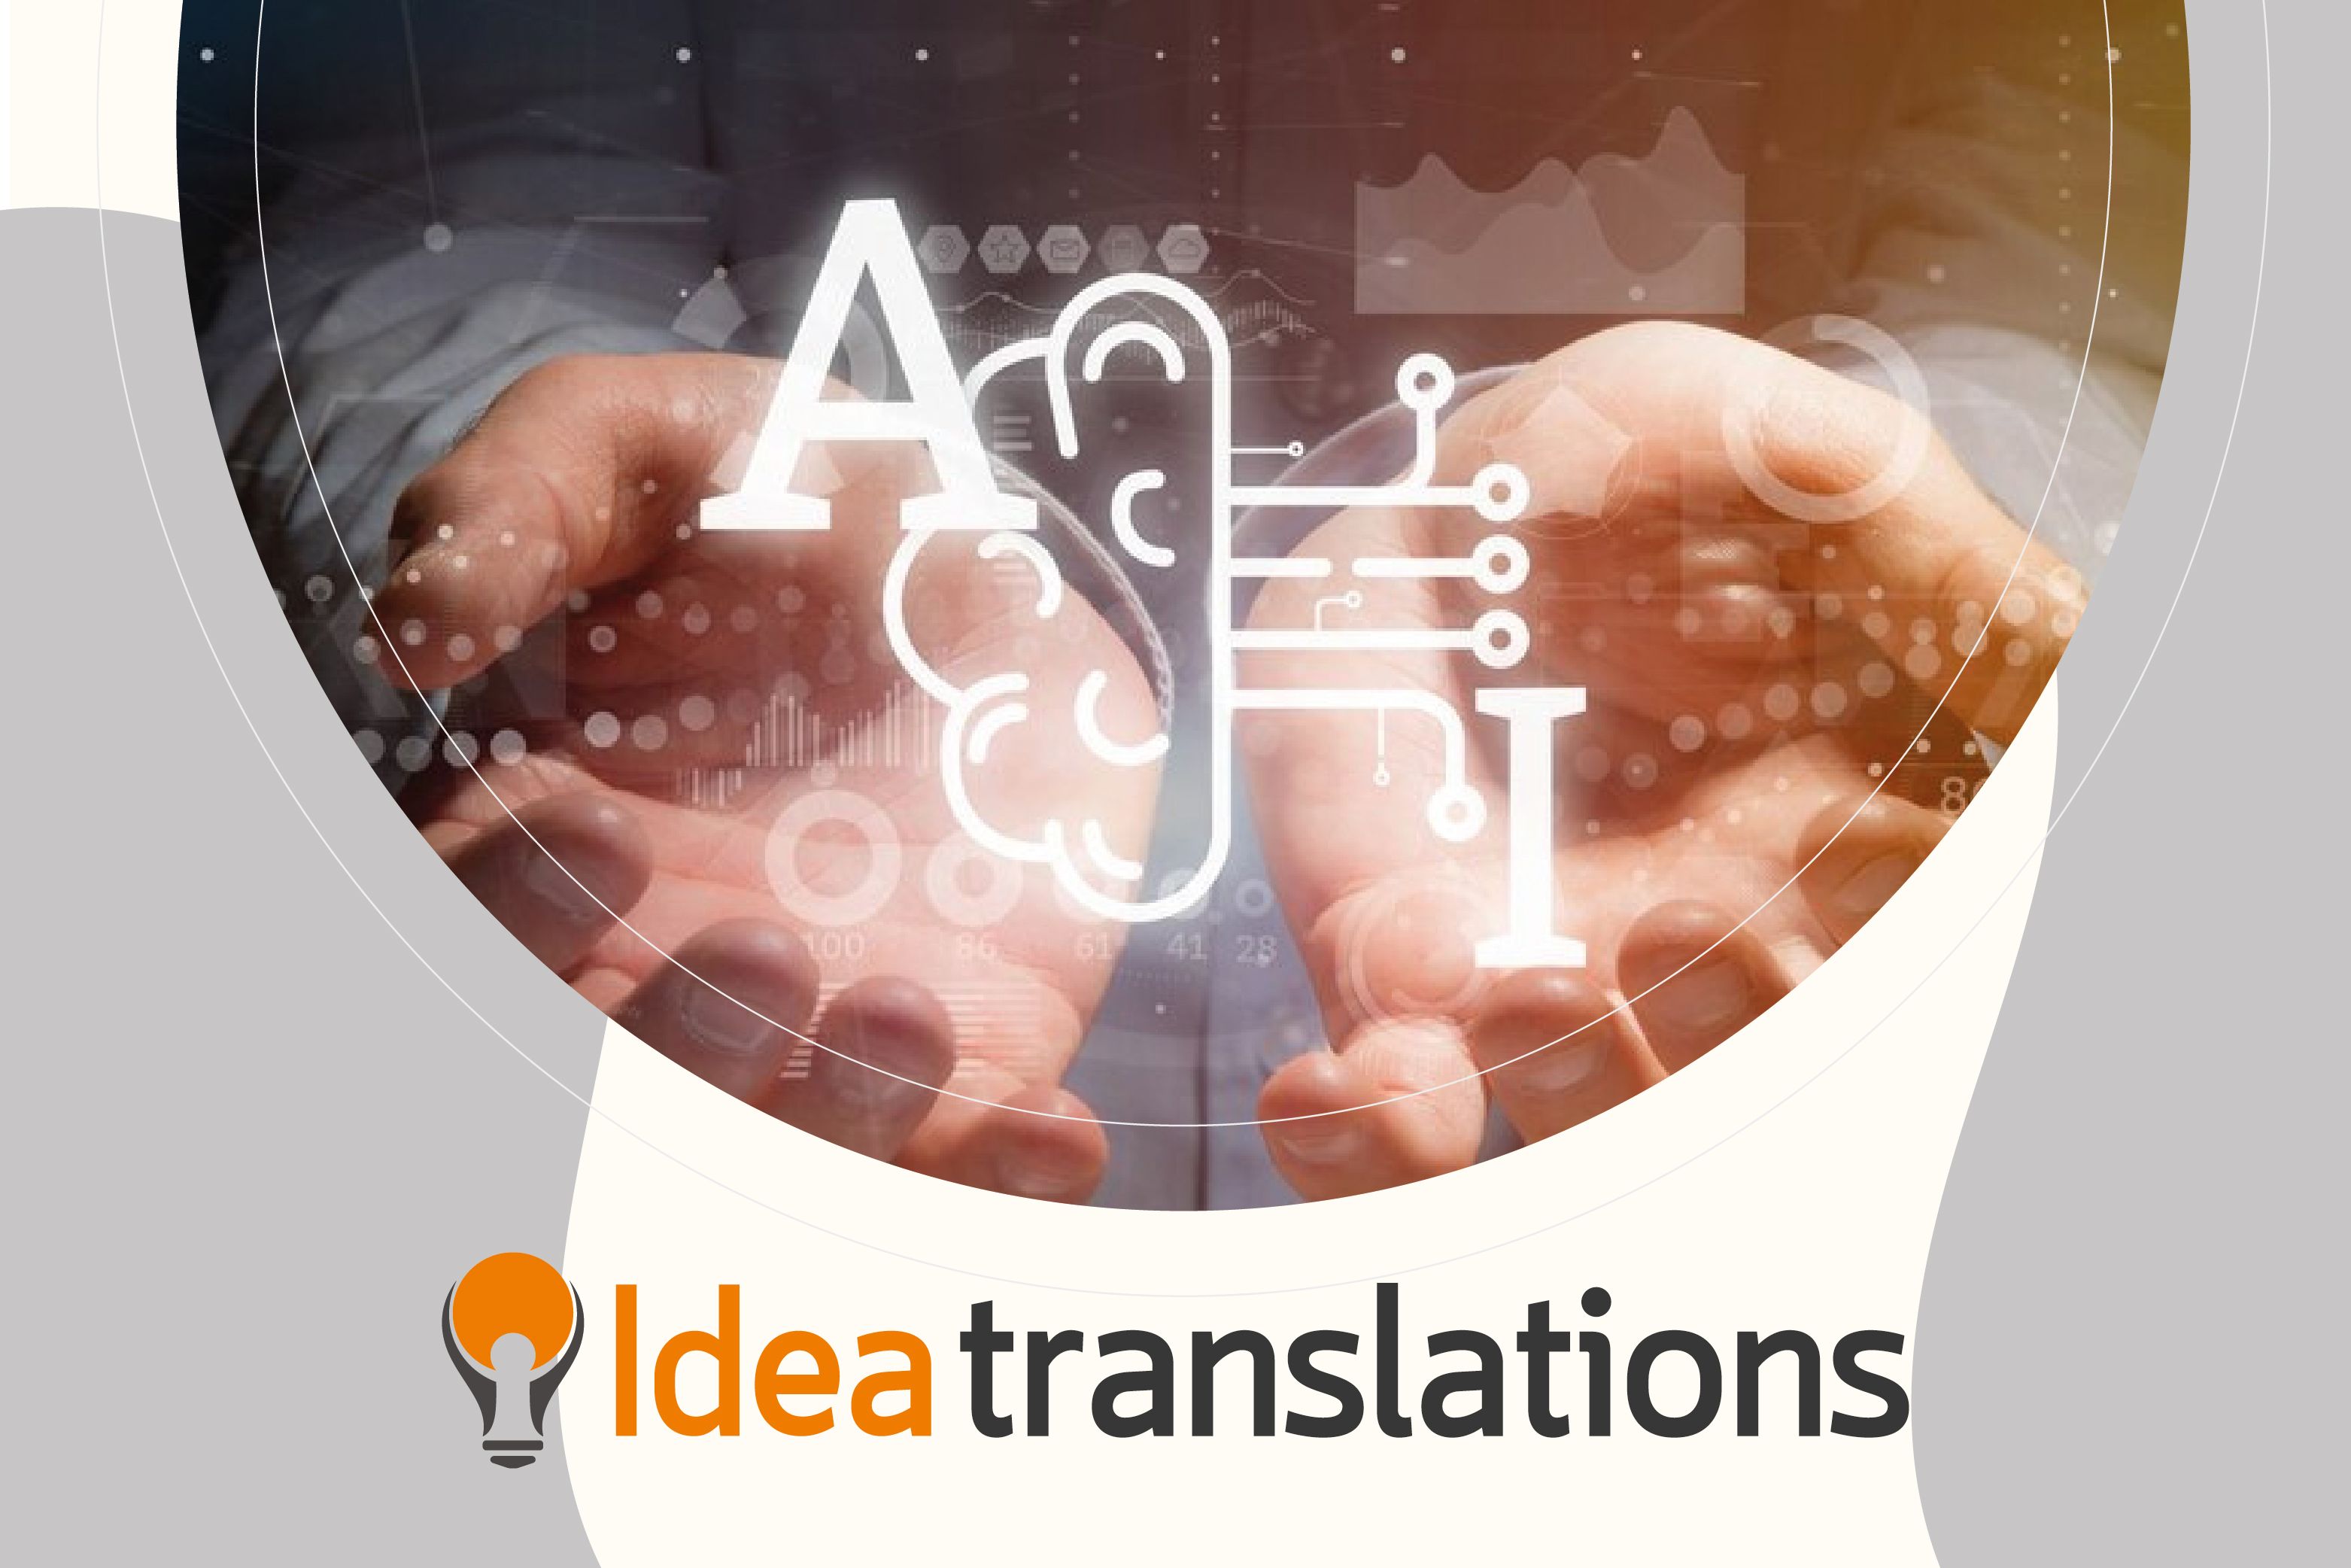 Automatic or Human Translation